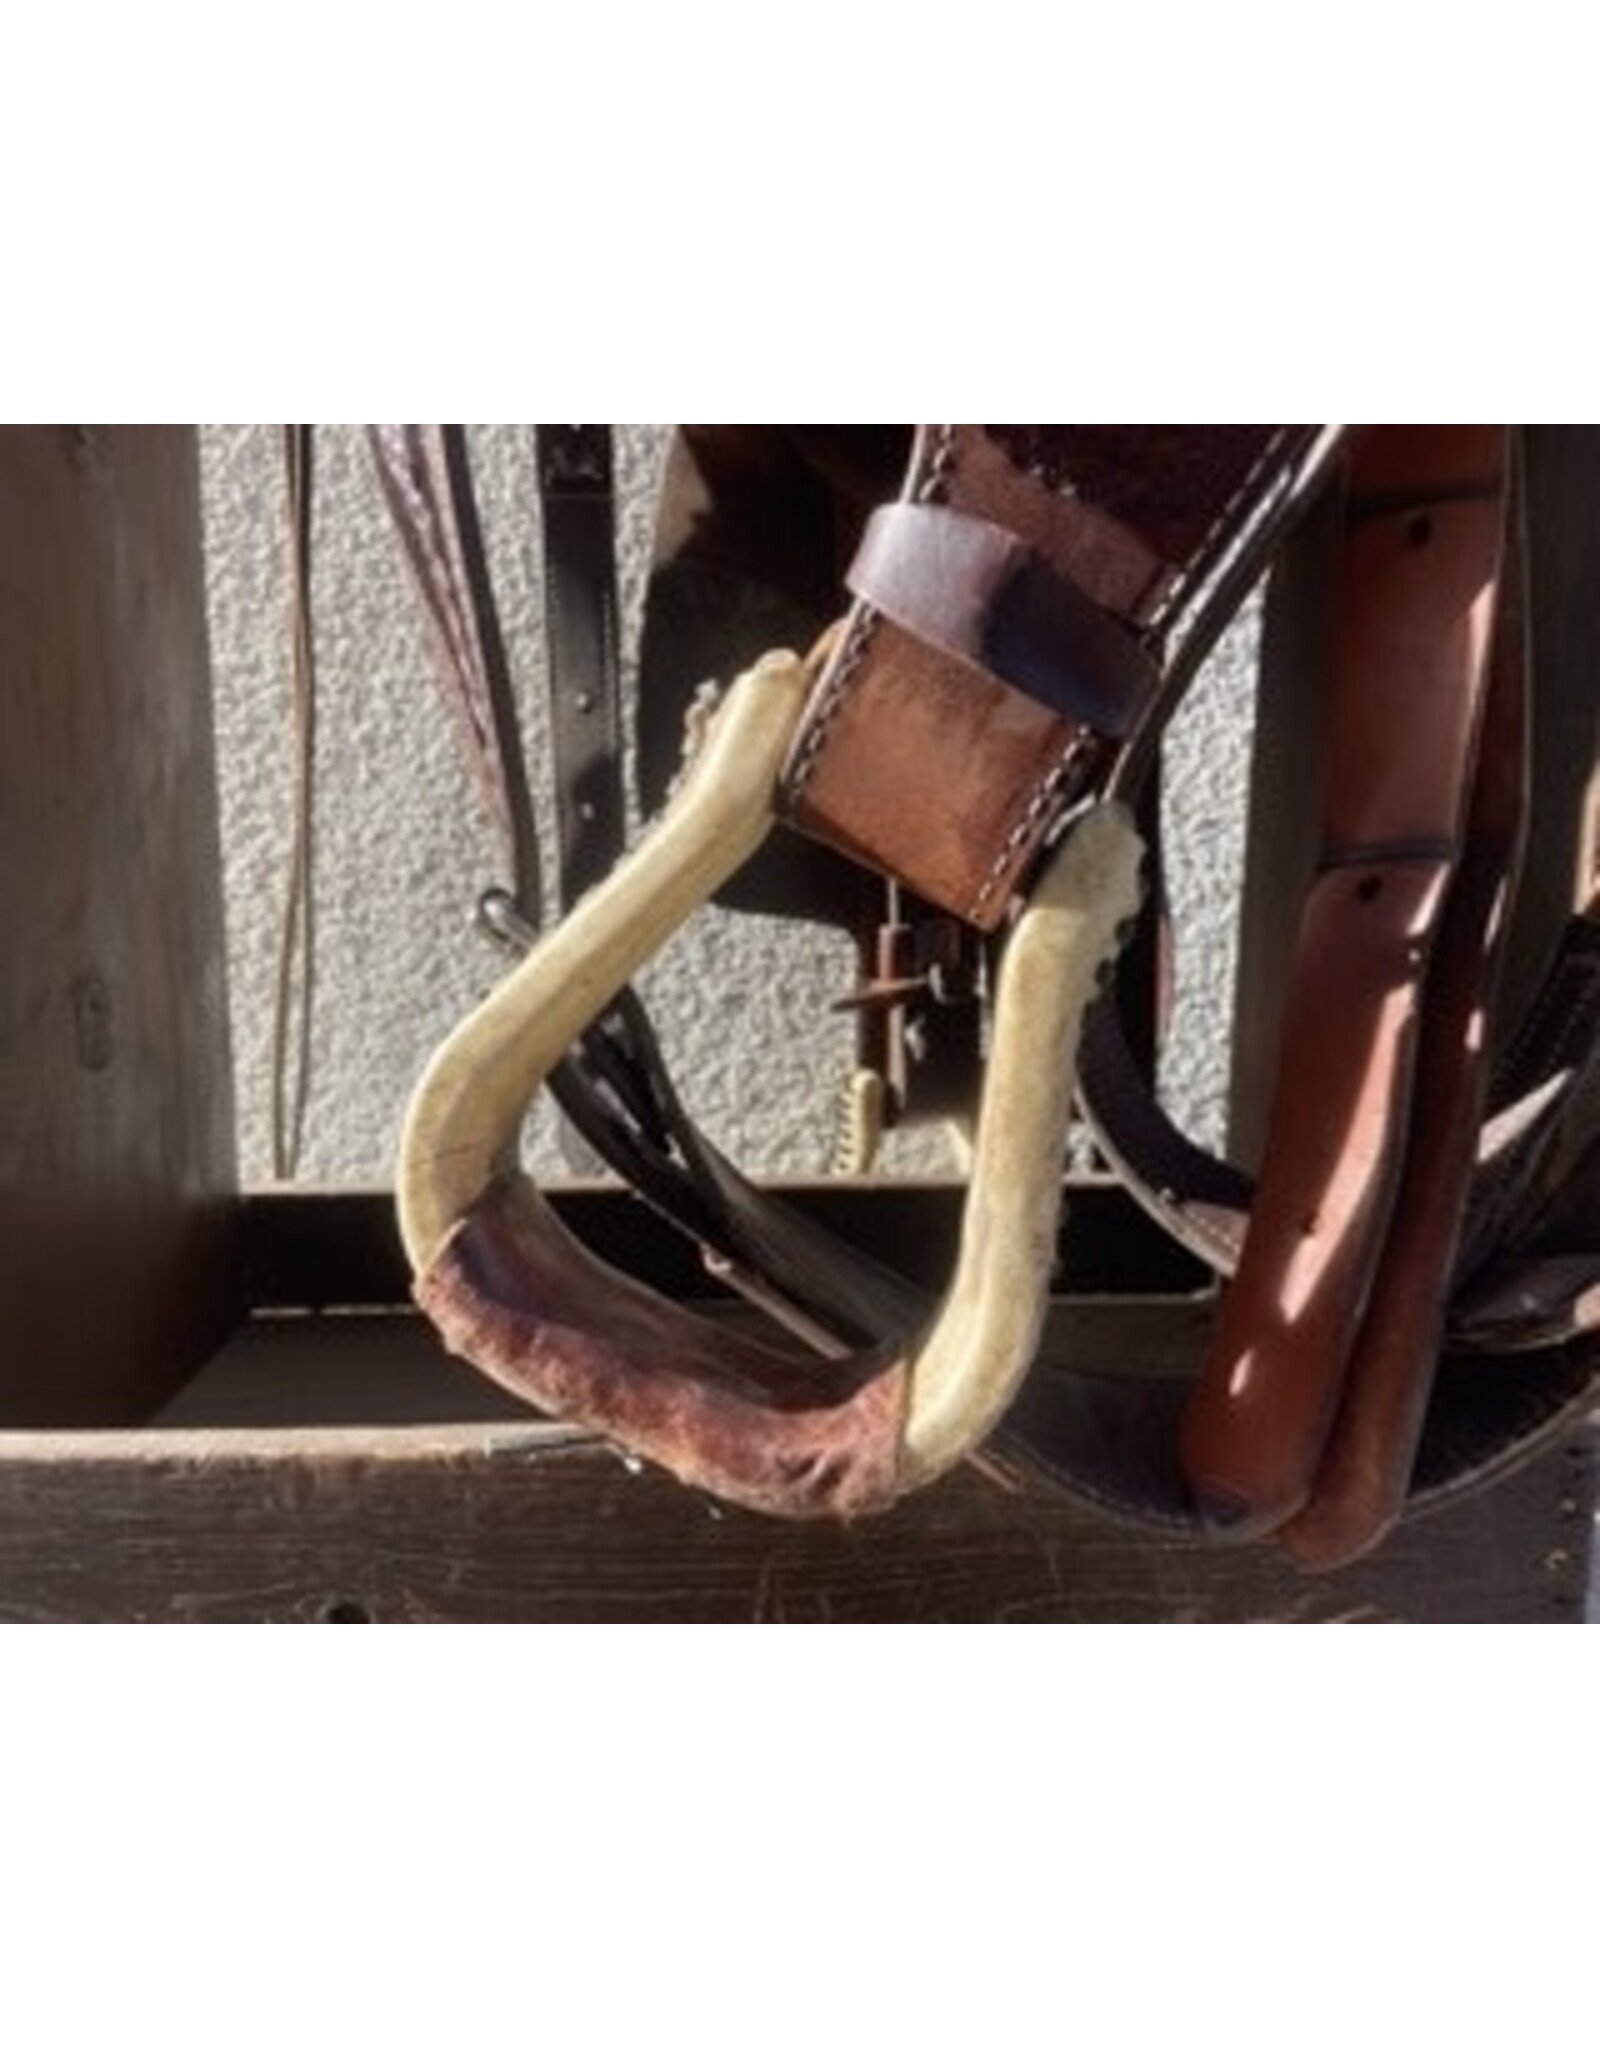 Dakota Pleaseure Barrel Saddle 16.5" Full Quarter Horse Bars w/ breastcollar and flank cinch